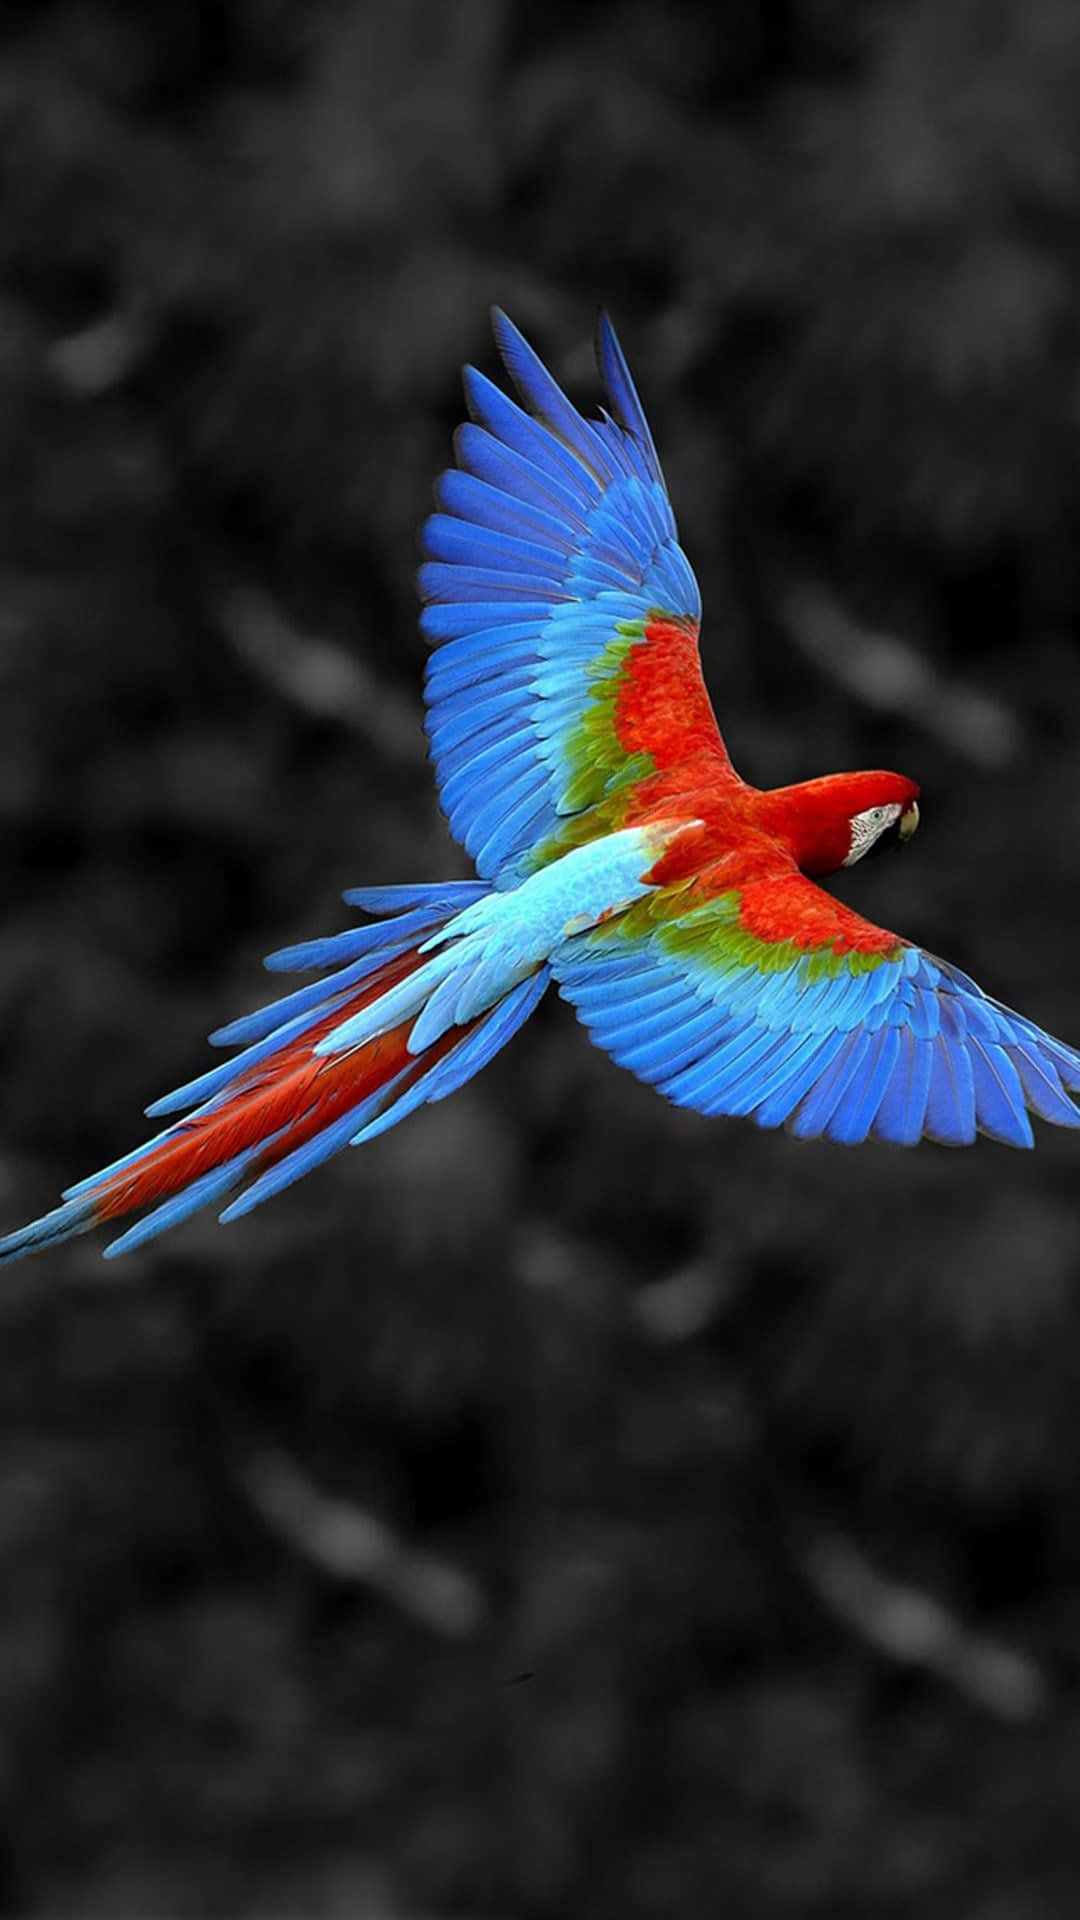 Colorful bird | wallpaper.sc iPhone XS Max